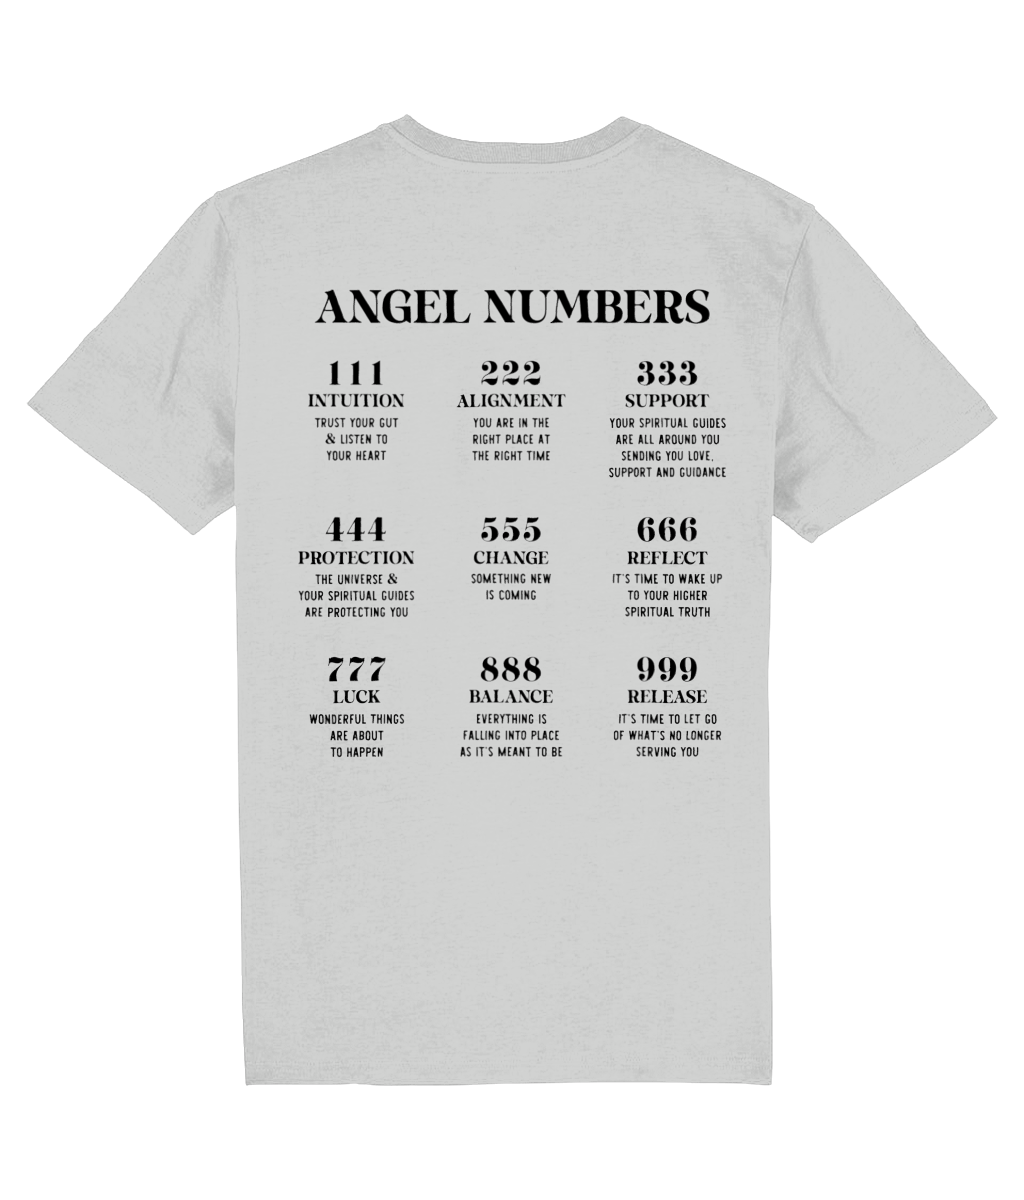 ANGEL NUMBERS SHIRT